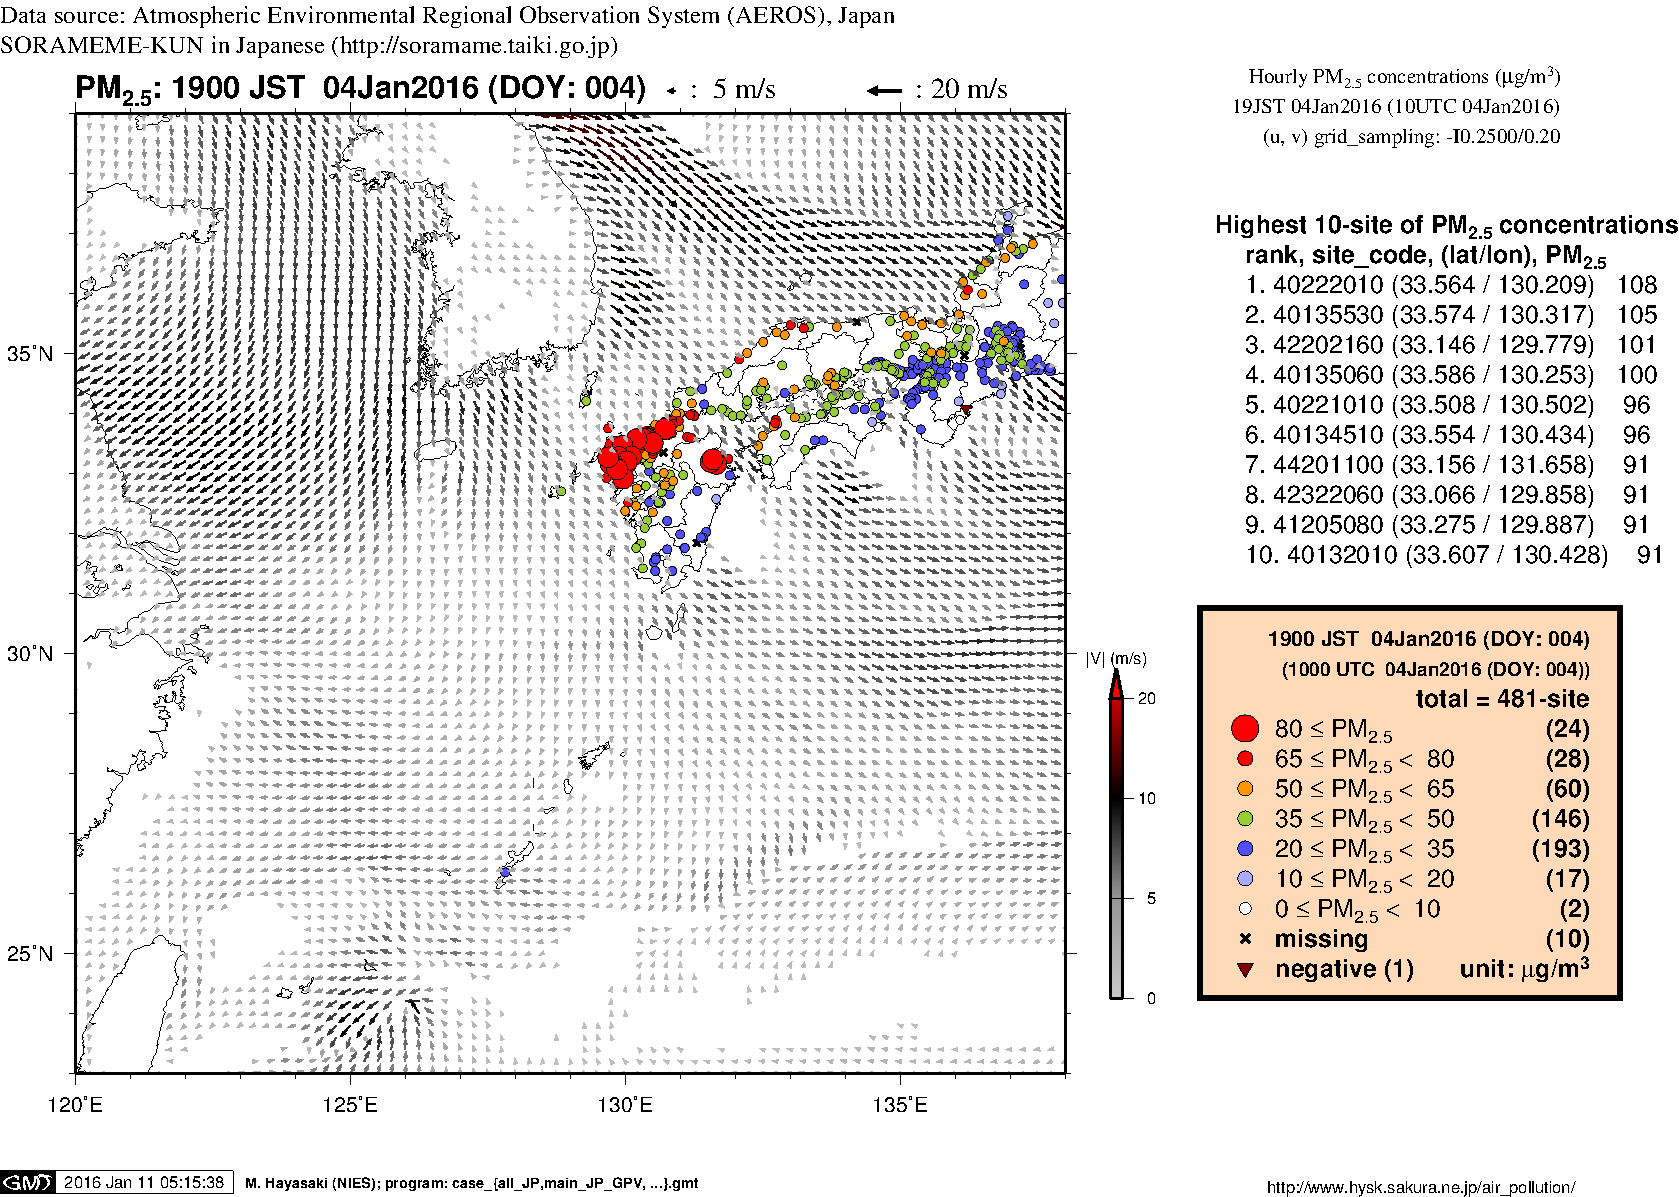 PM2.5 concentration in western Japan (19JST 04Jan2016)